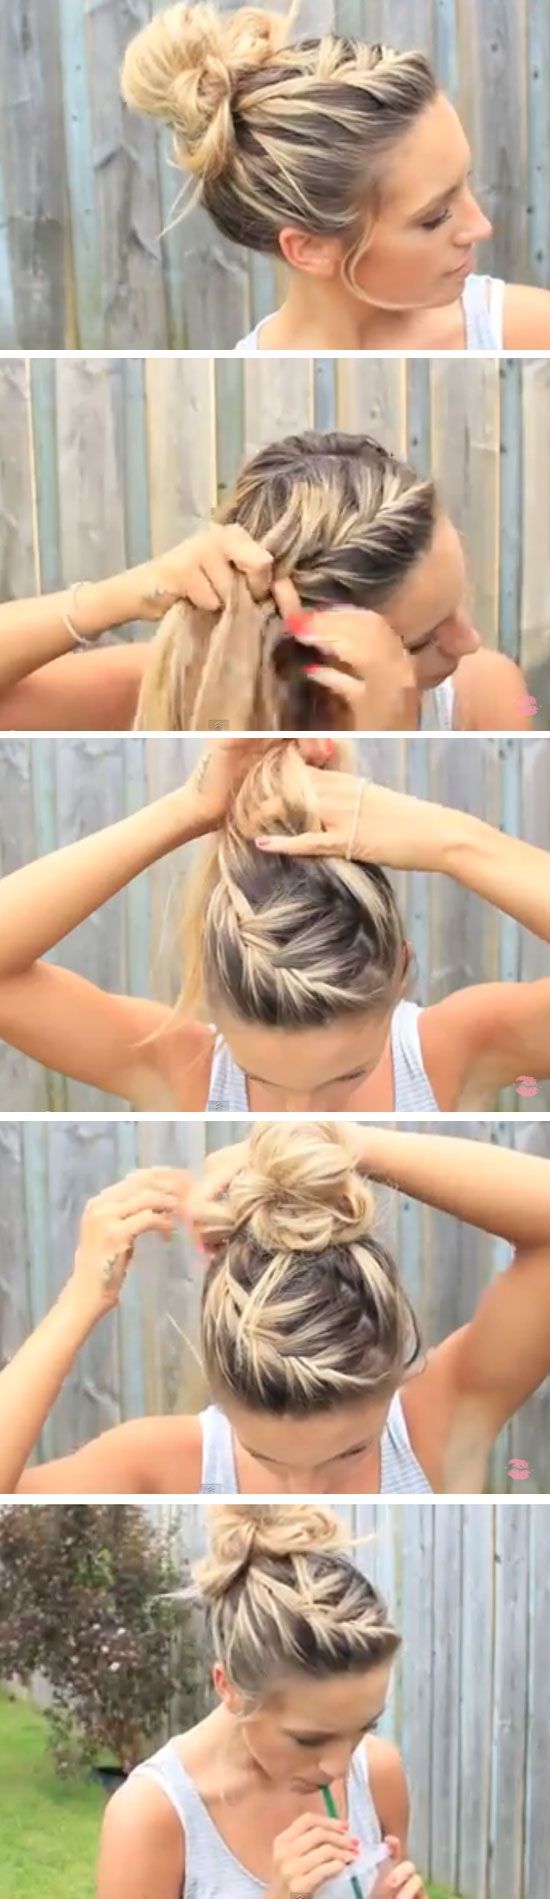 Easy DIY Hairstyles for The Beach | Messy Bun